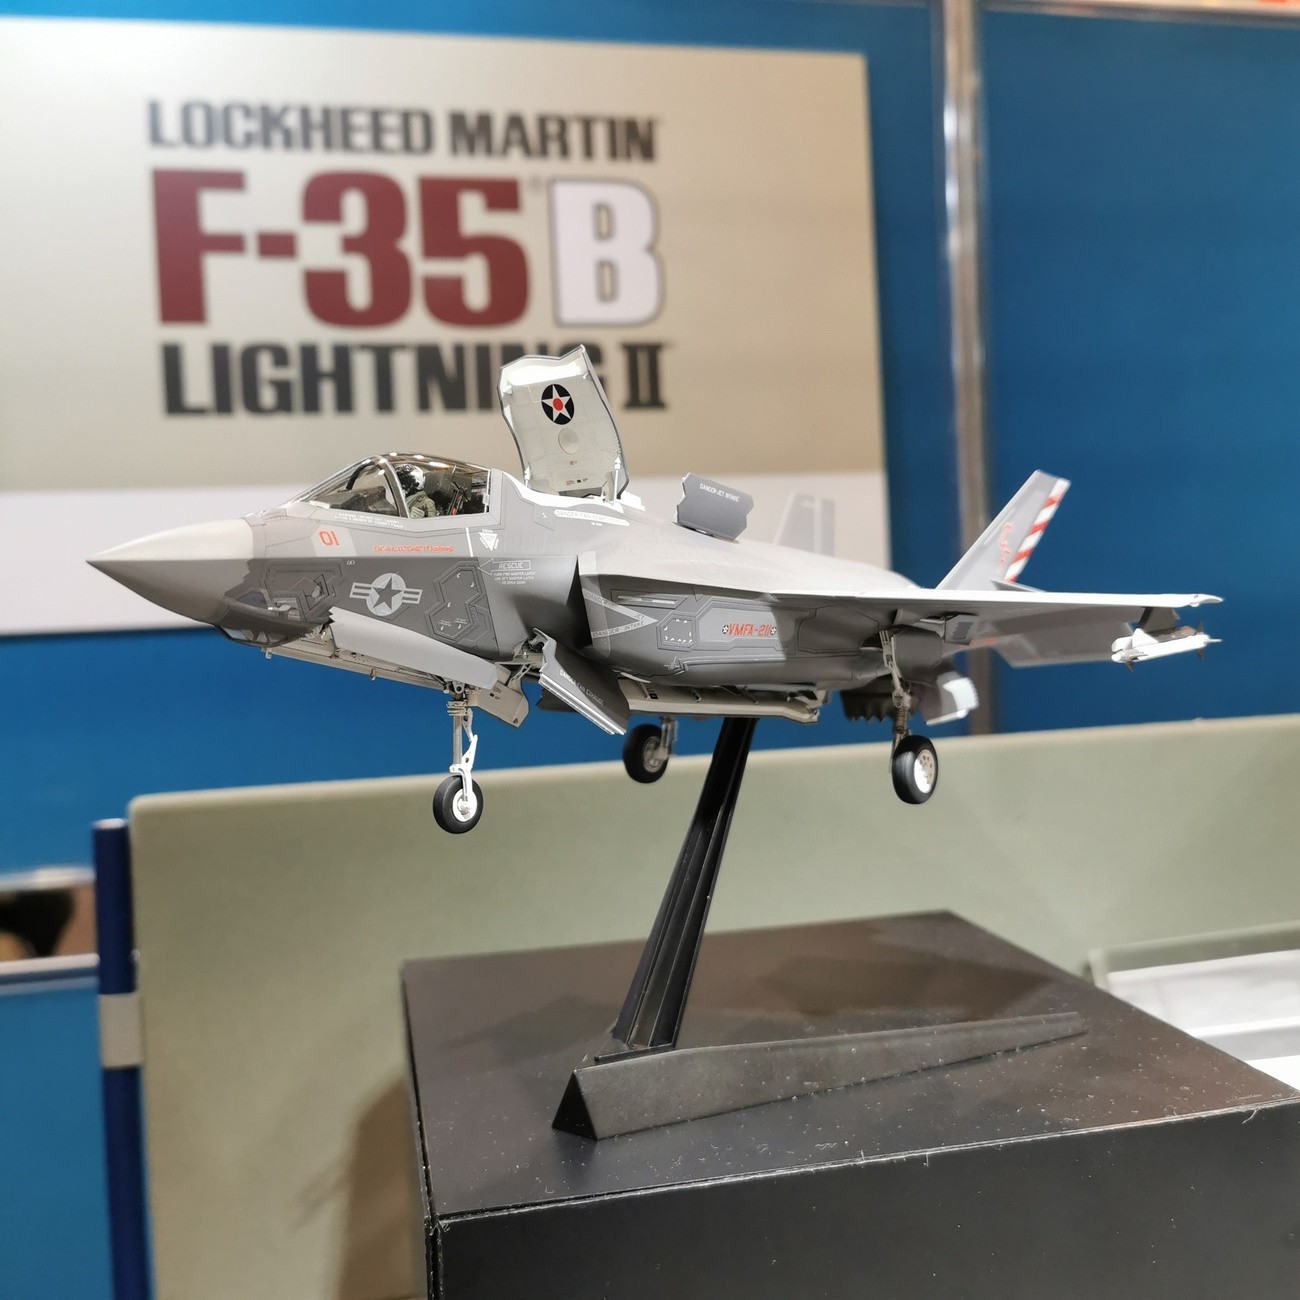 61125 - Locked Martin F-35B lightning II – 1:48